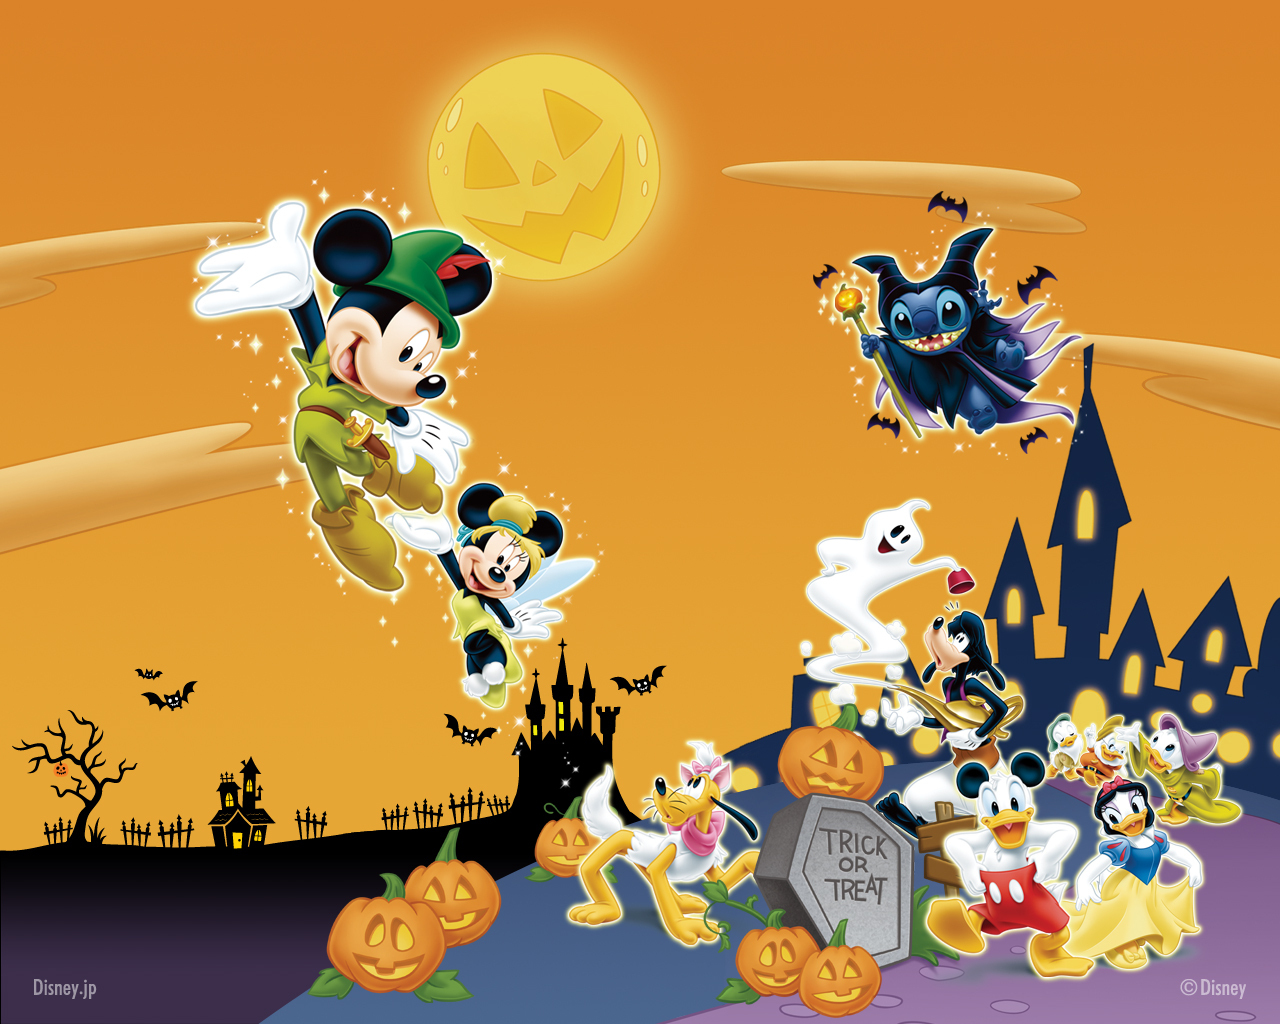 Halloween Wallpaper For Disney S Fan Holiday